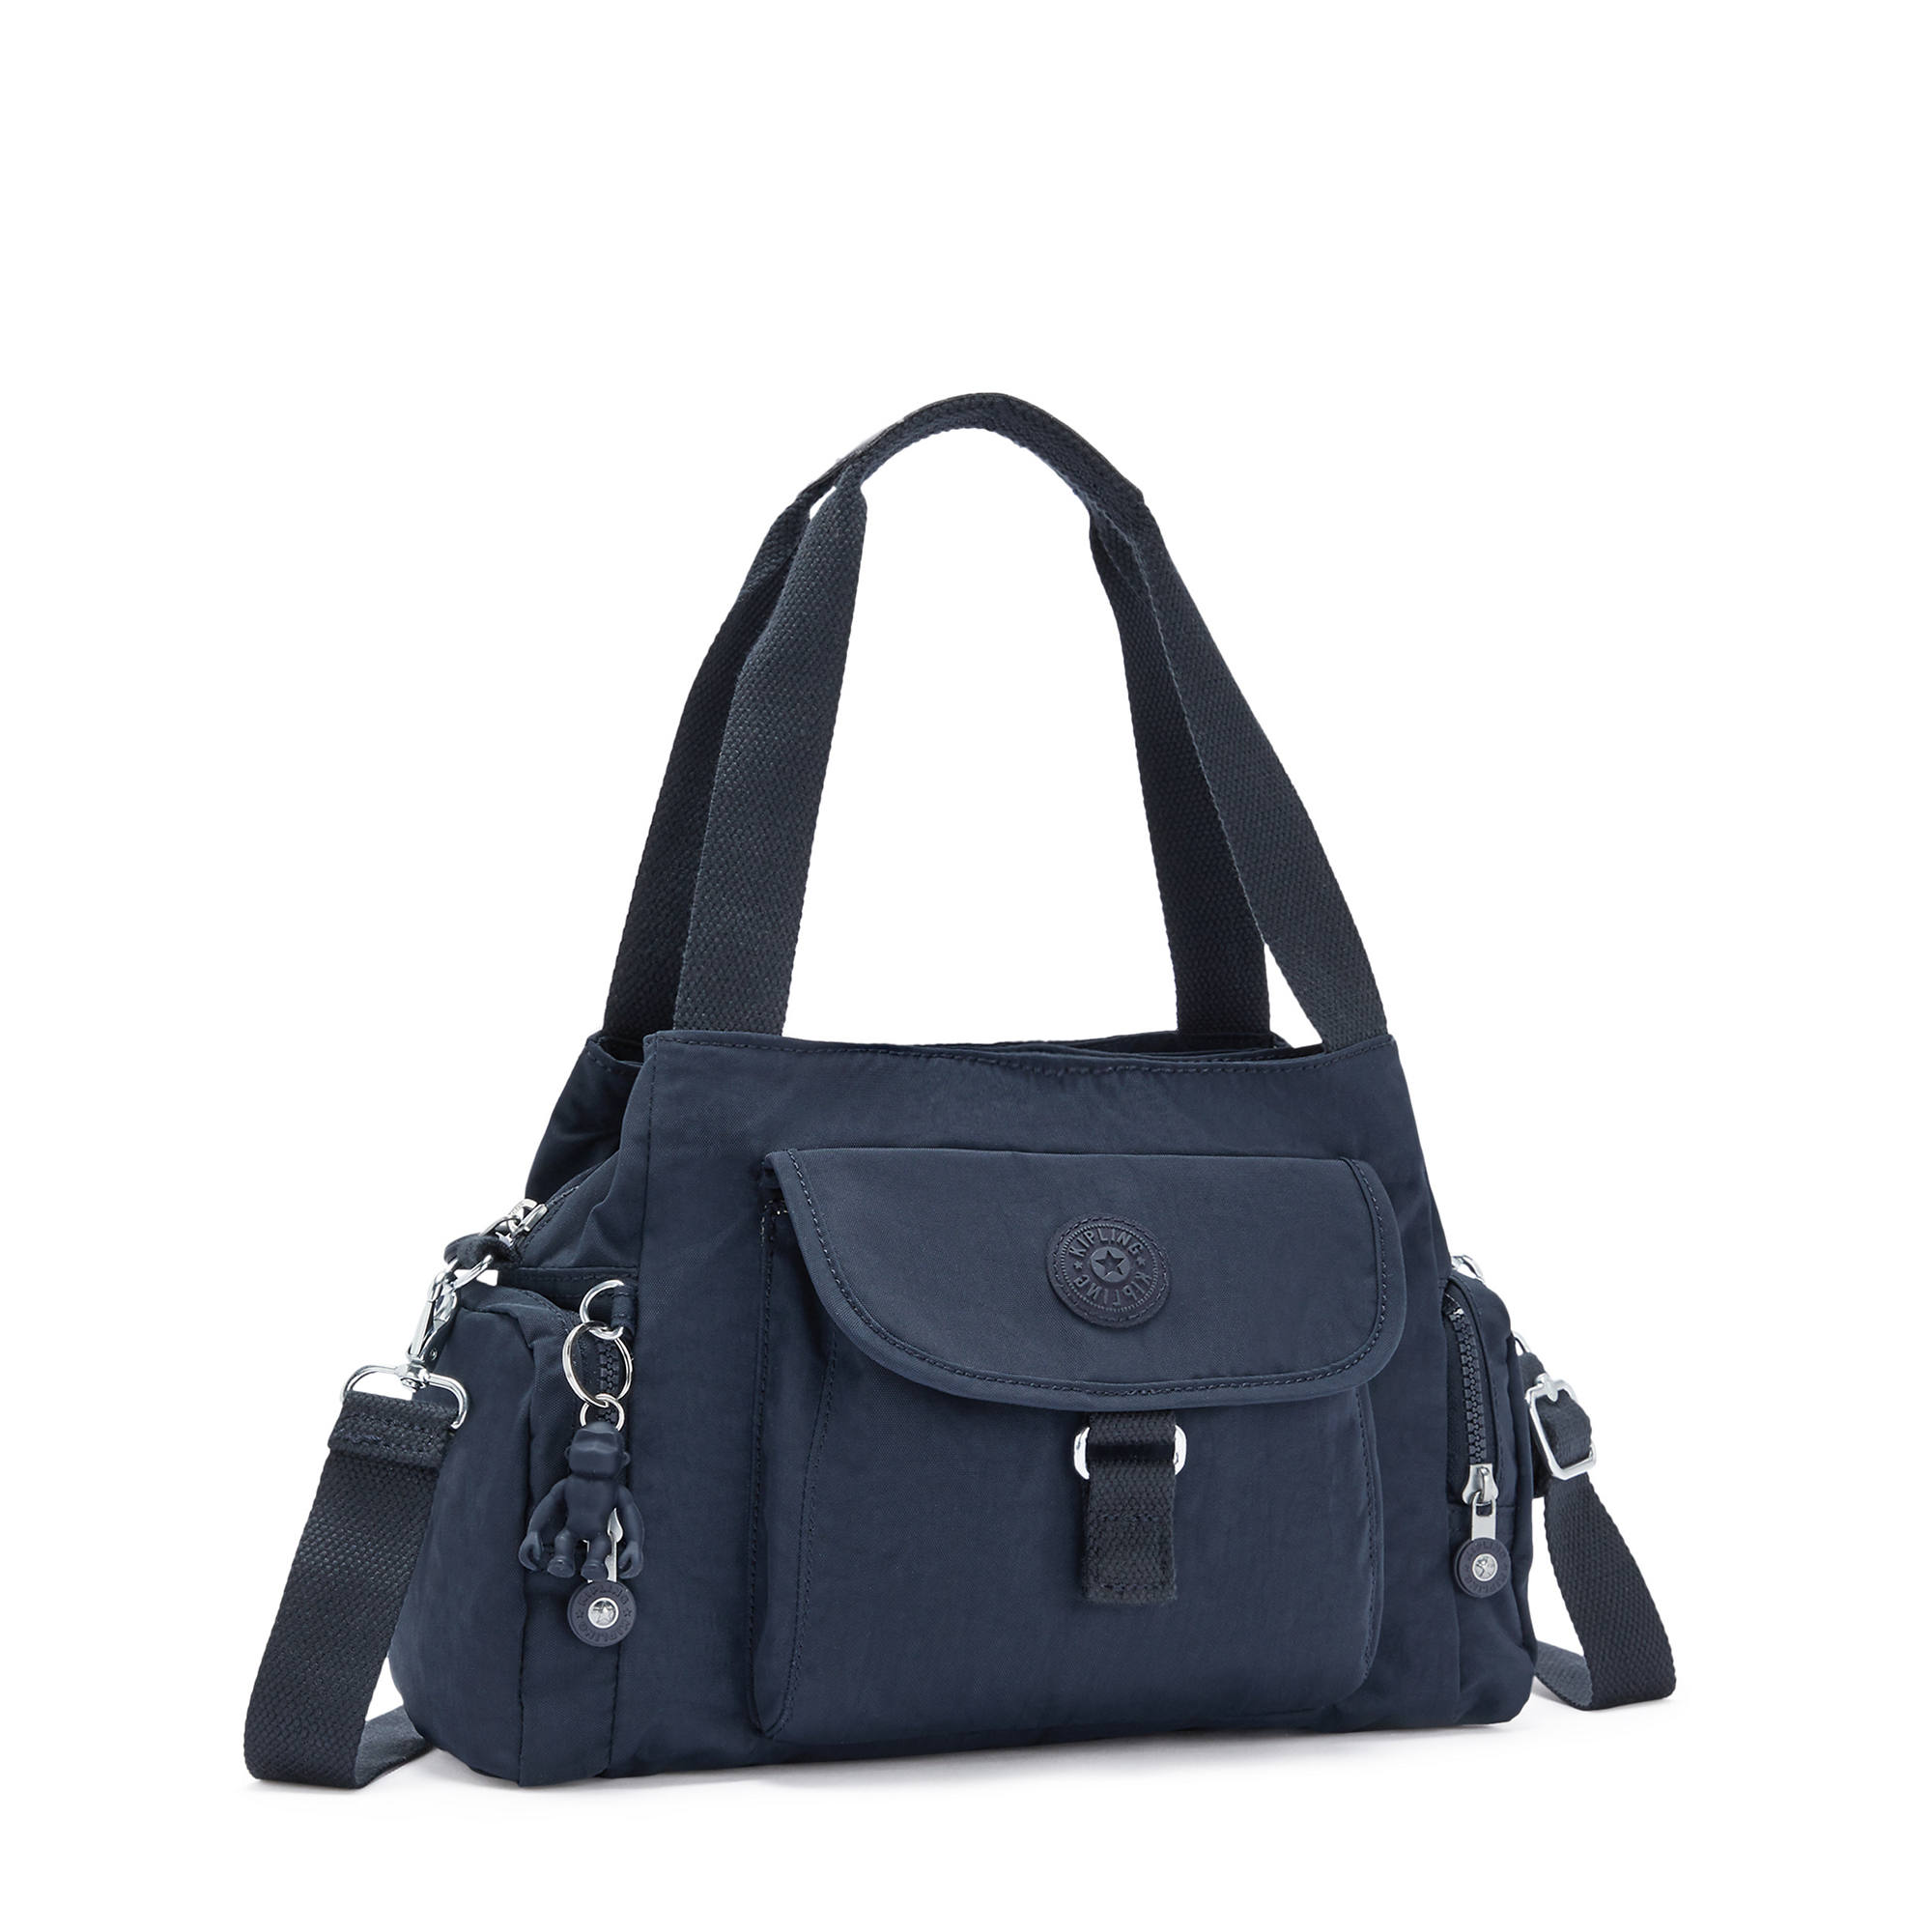 Kipling Felix Large Handbag | eBay